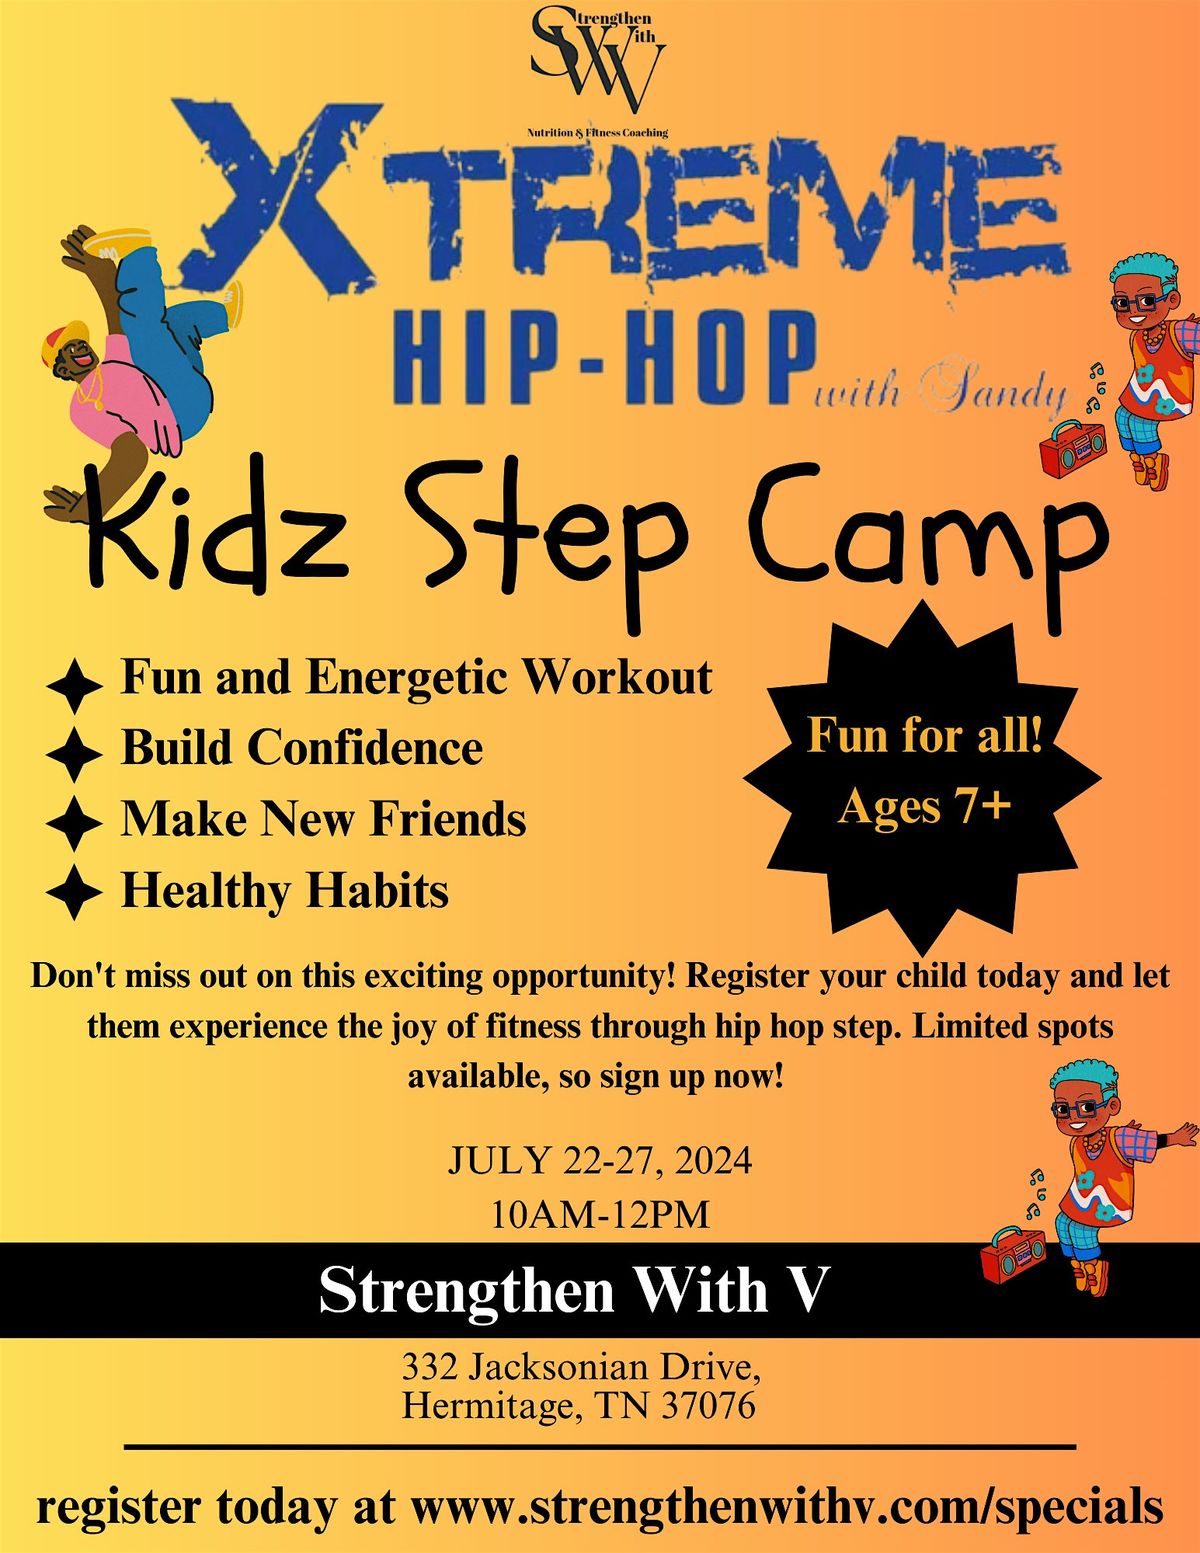 X-treme Hip-Hop Kidz Step Camp